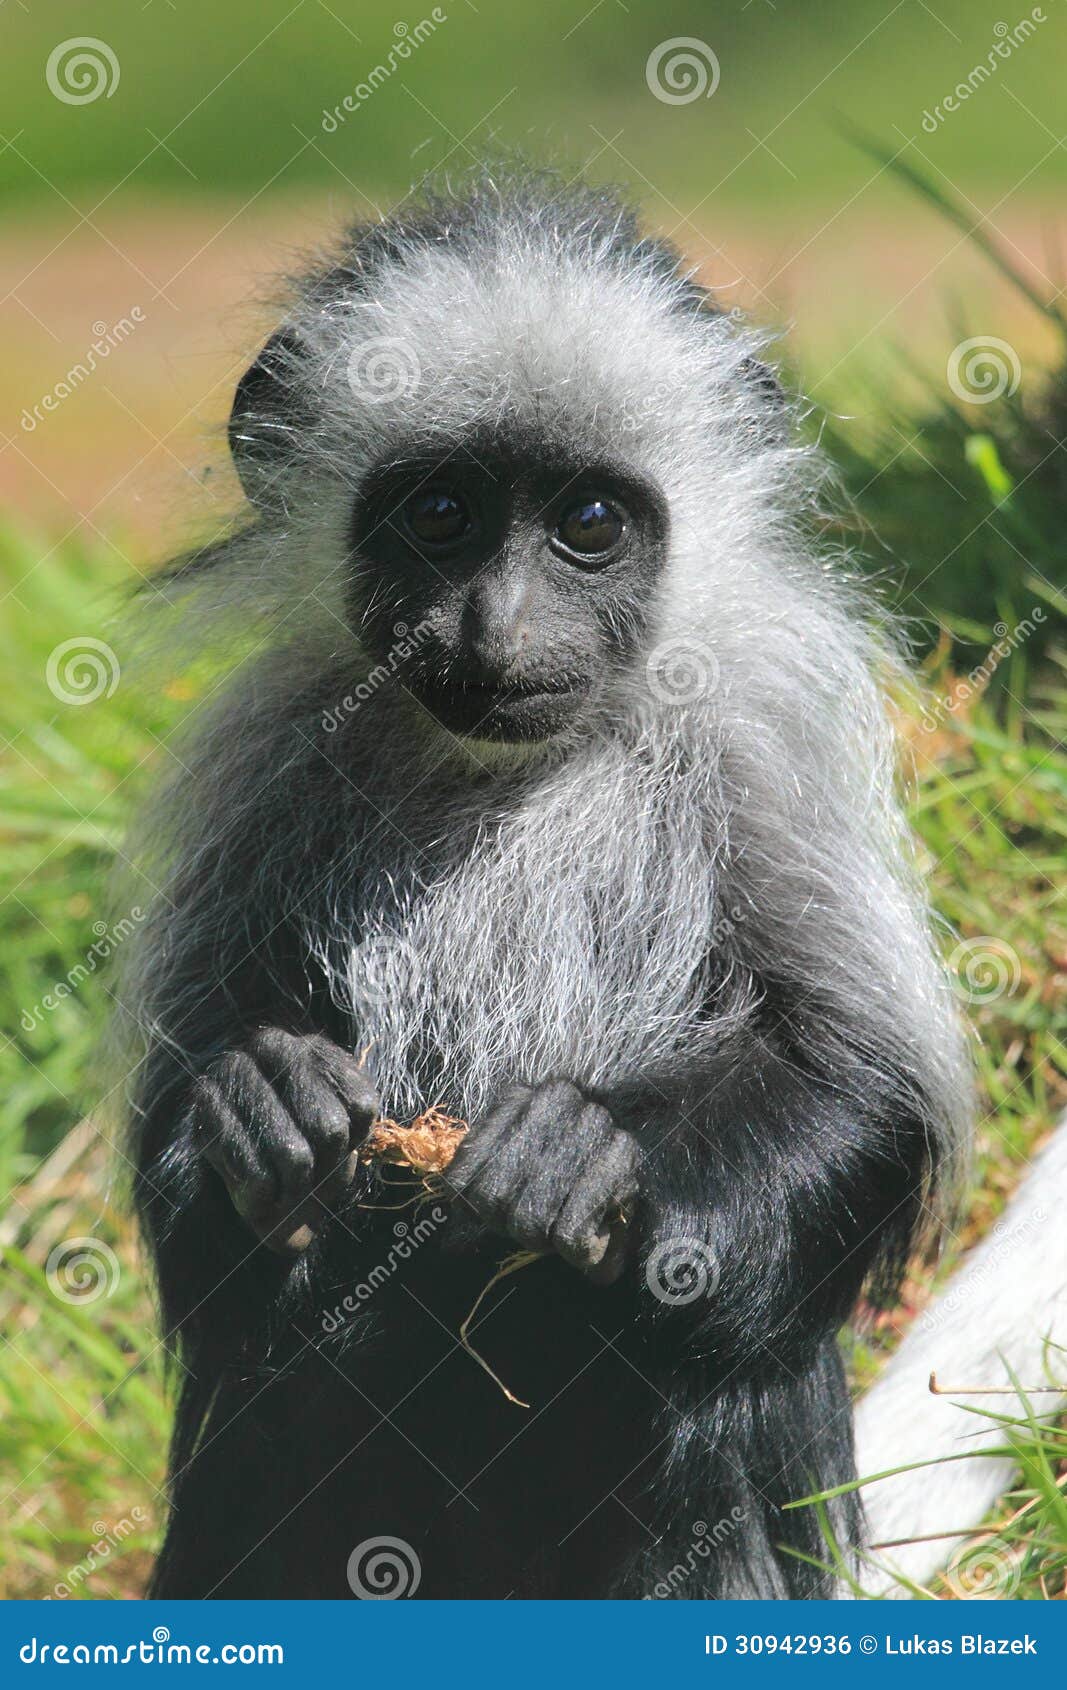 king colobus monkey